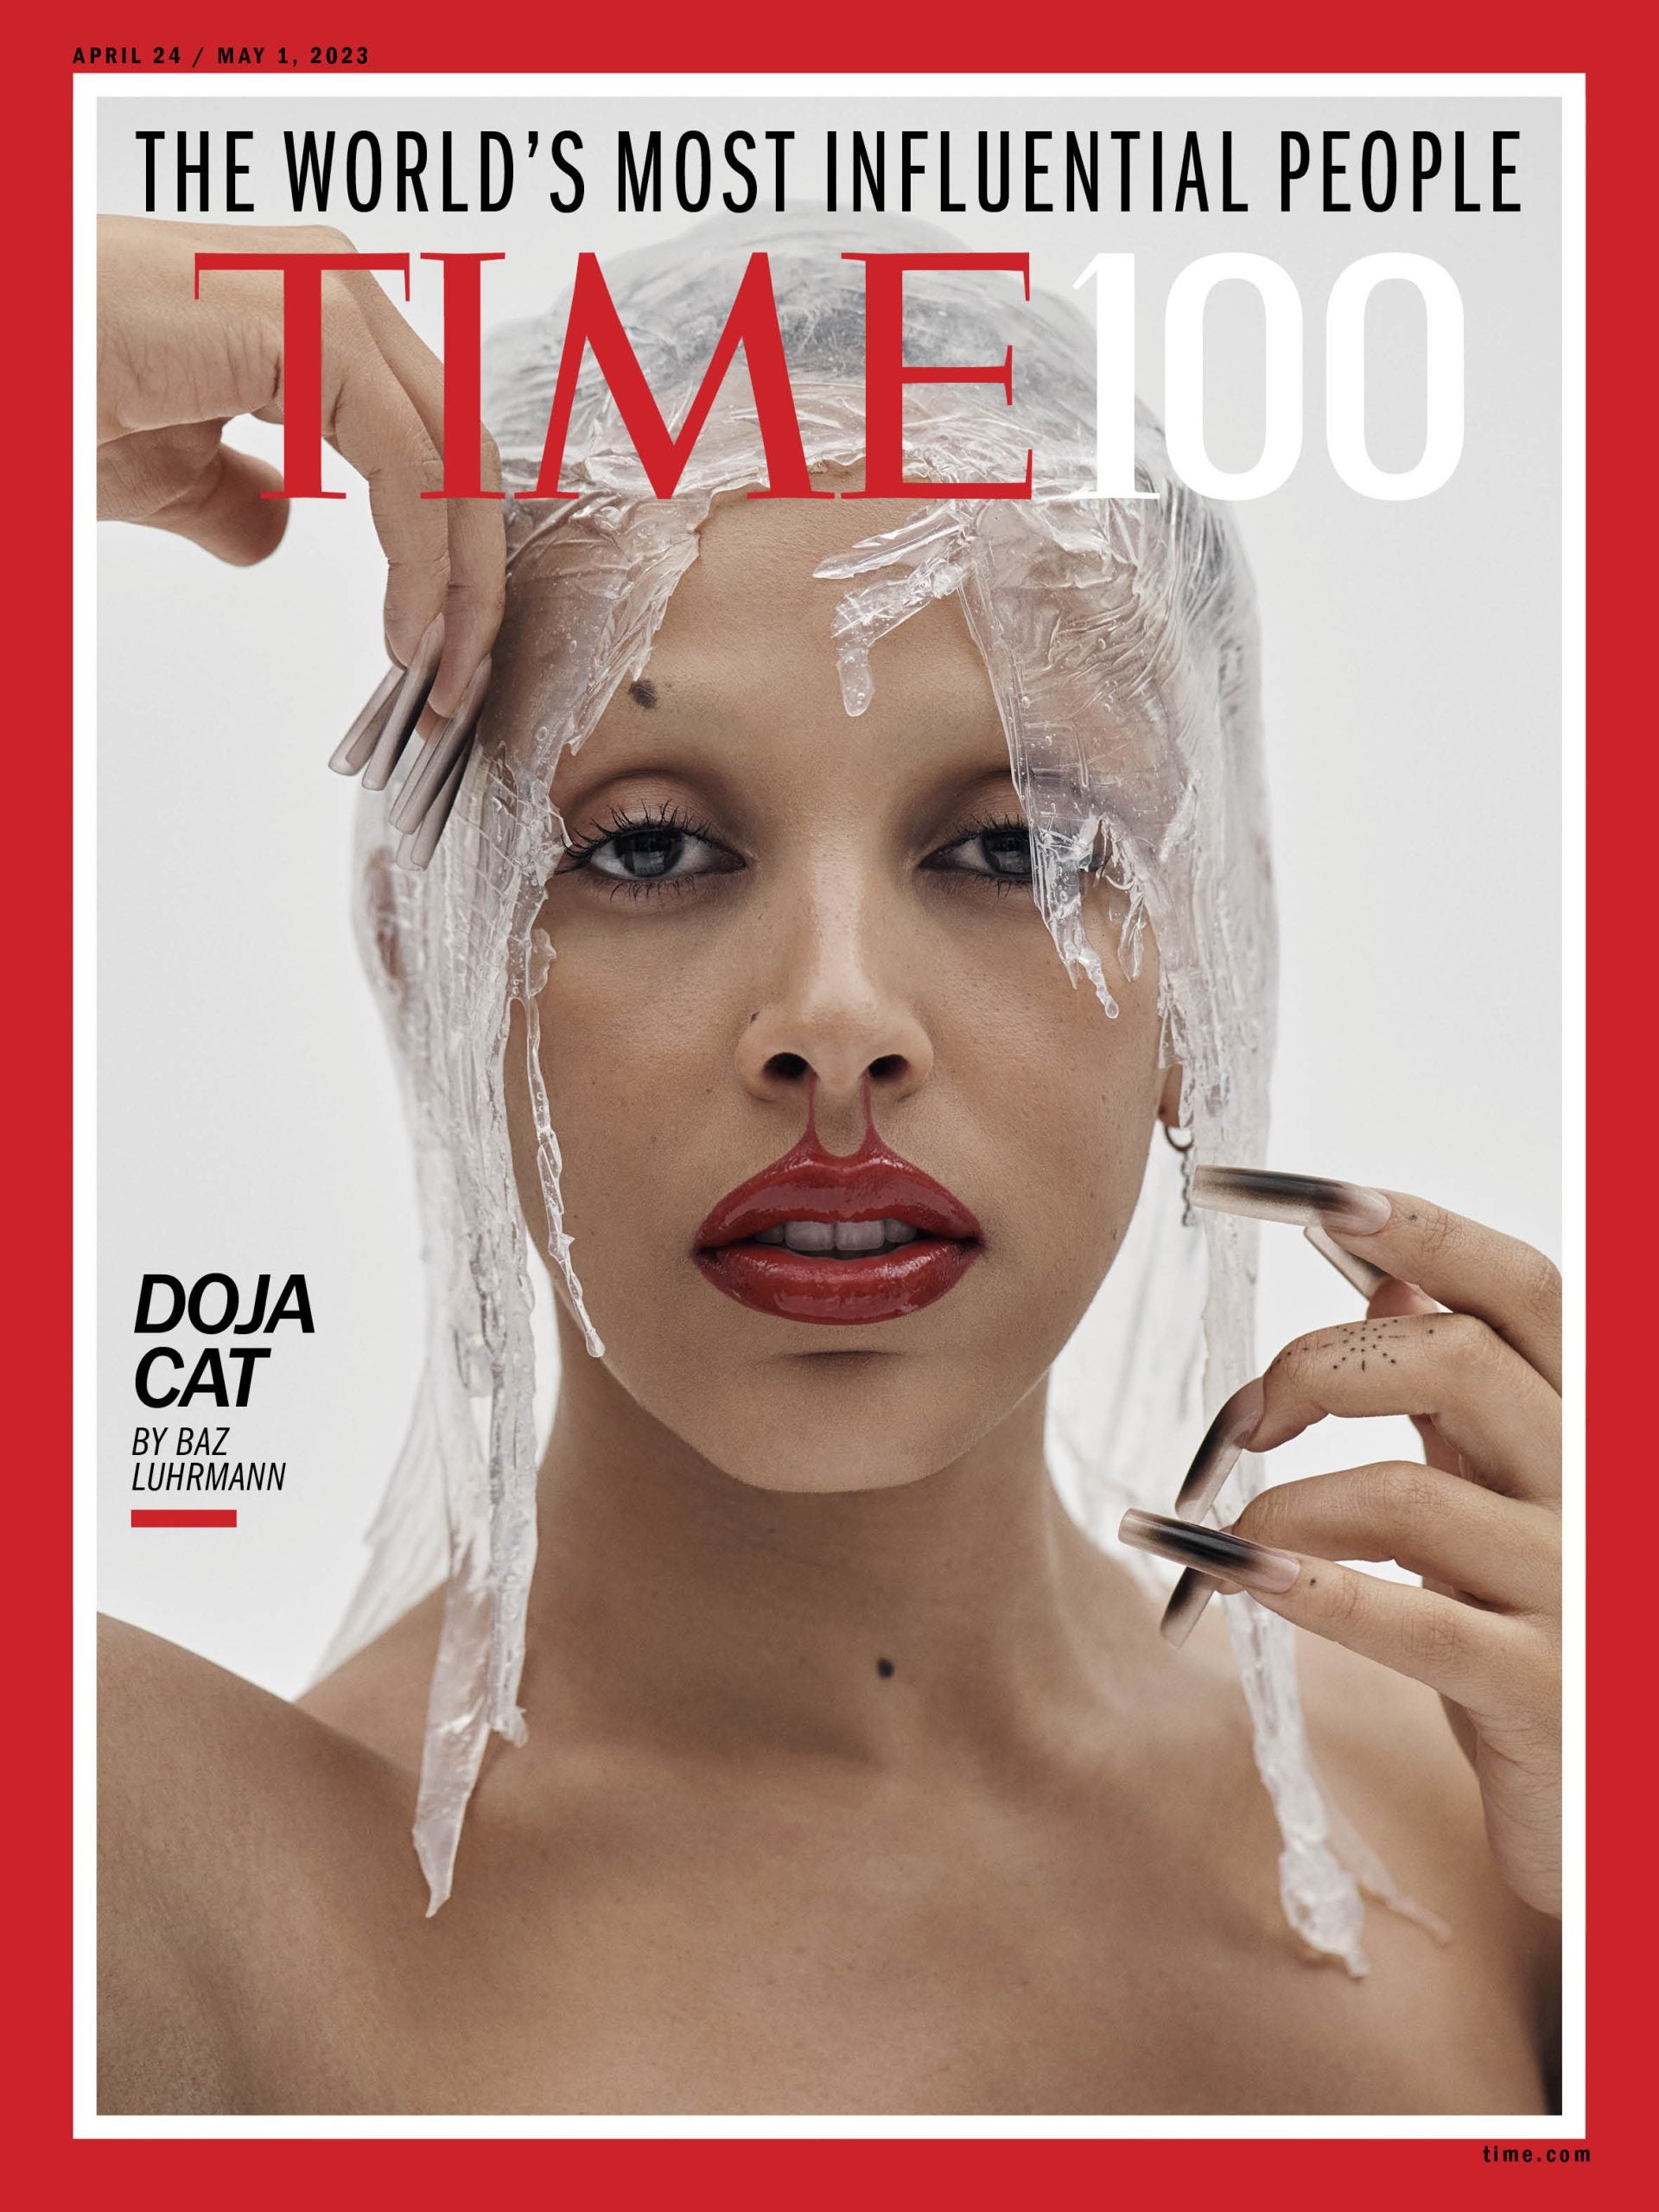 Beyoncé, Michael B. Jordan, Angela Bassett And More Make The TIME100 Most Influential List